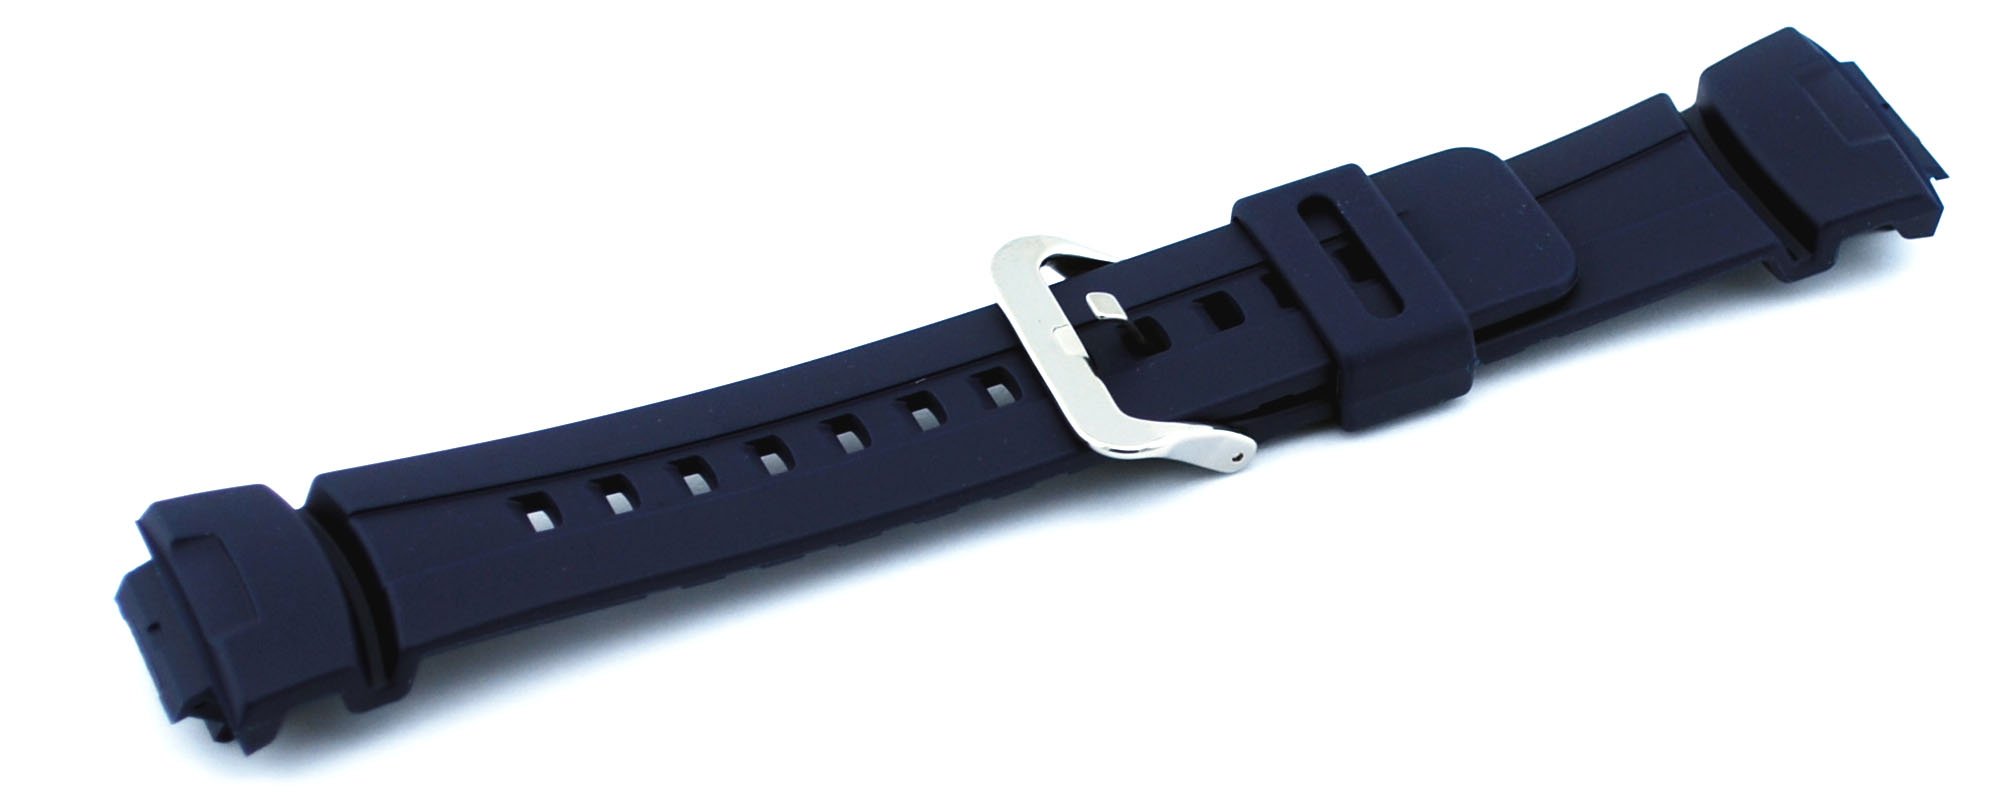 Casio Genuine Replacement Strap for G Shock Watch Model G-100-2B, G-2310-2V, G-2400-2V, G-100-2BV